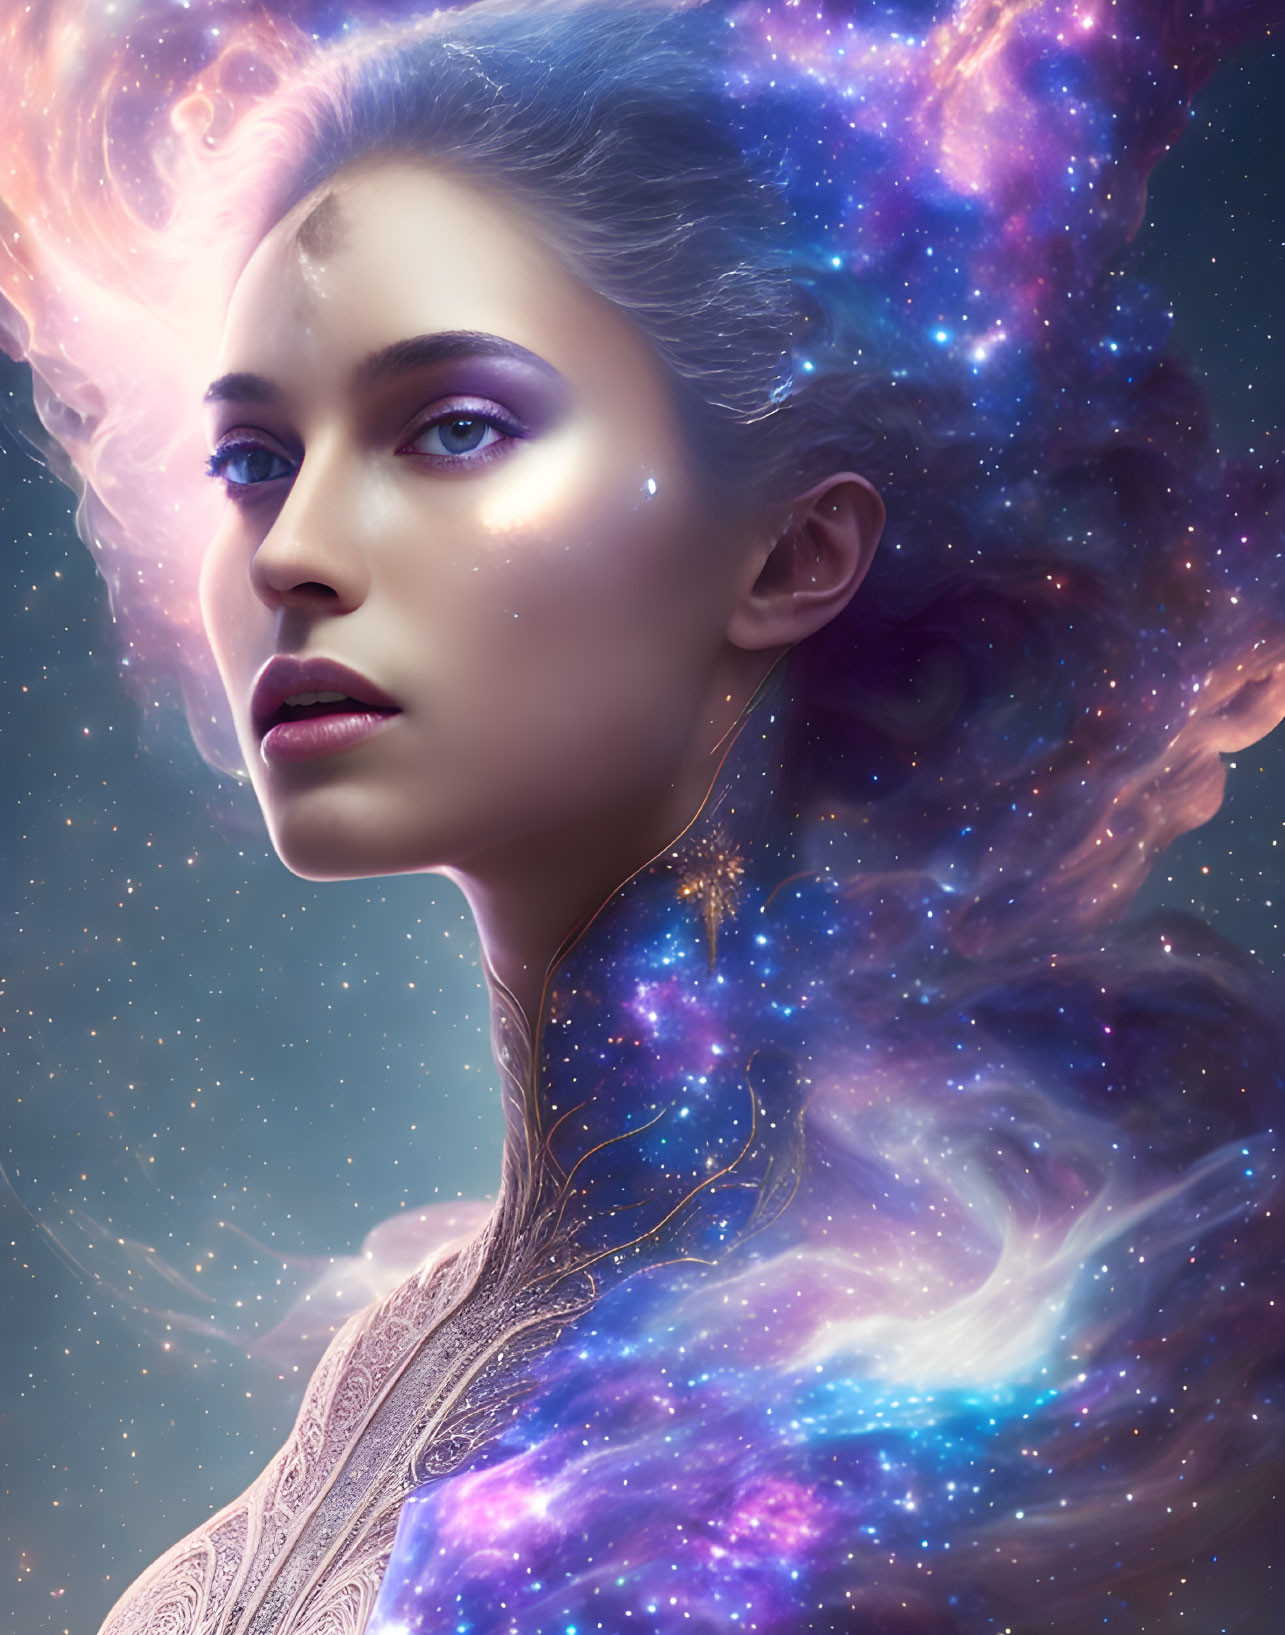 The nebulae goddess 